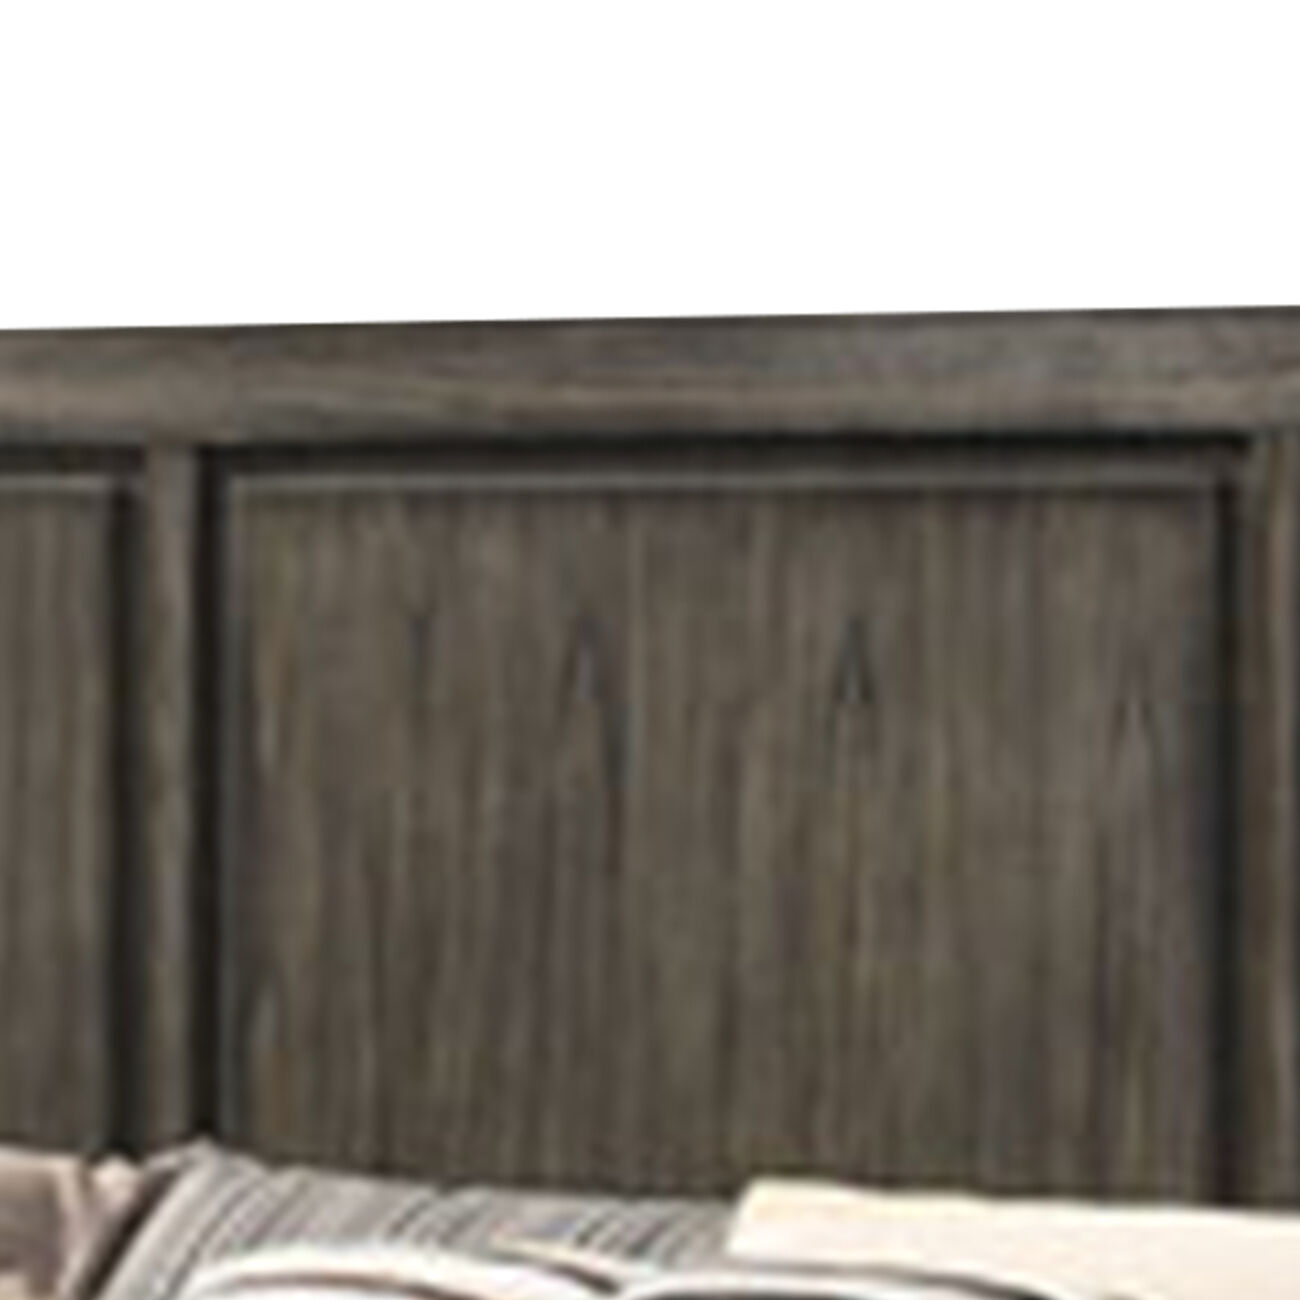 Wooden Queen Size Headboard with Natural Grain Texture Details, Brown